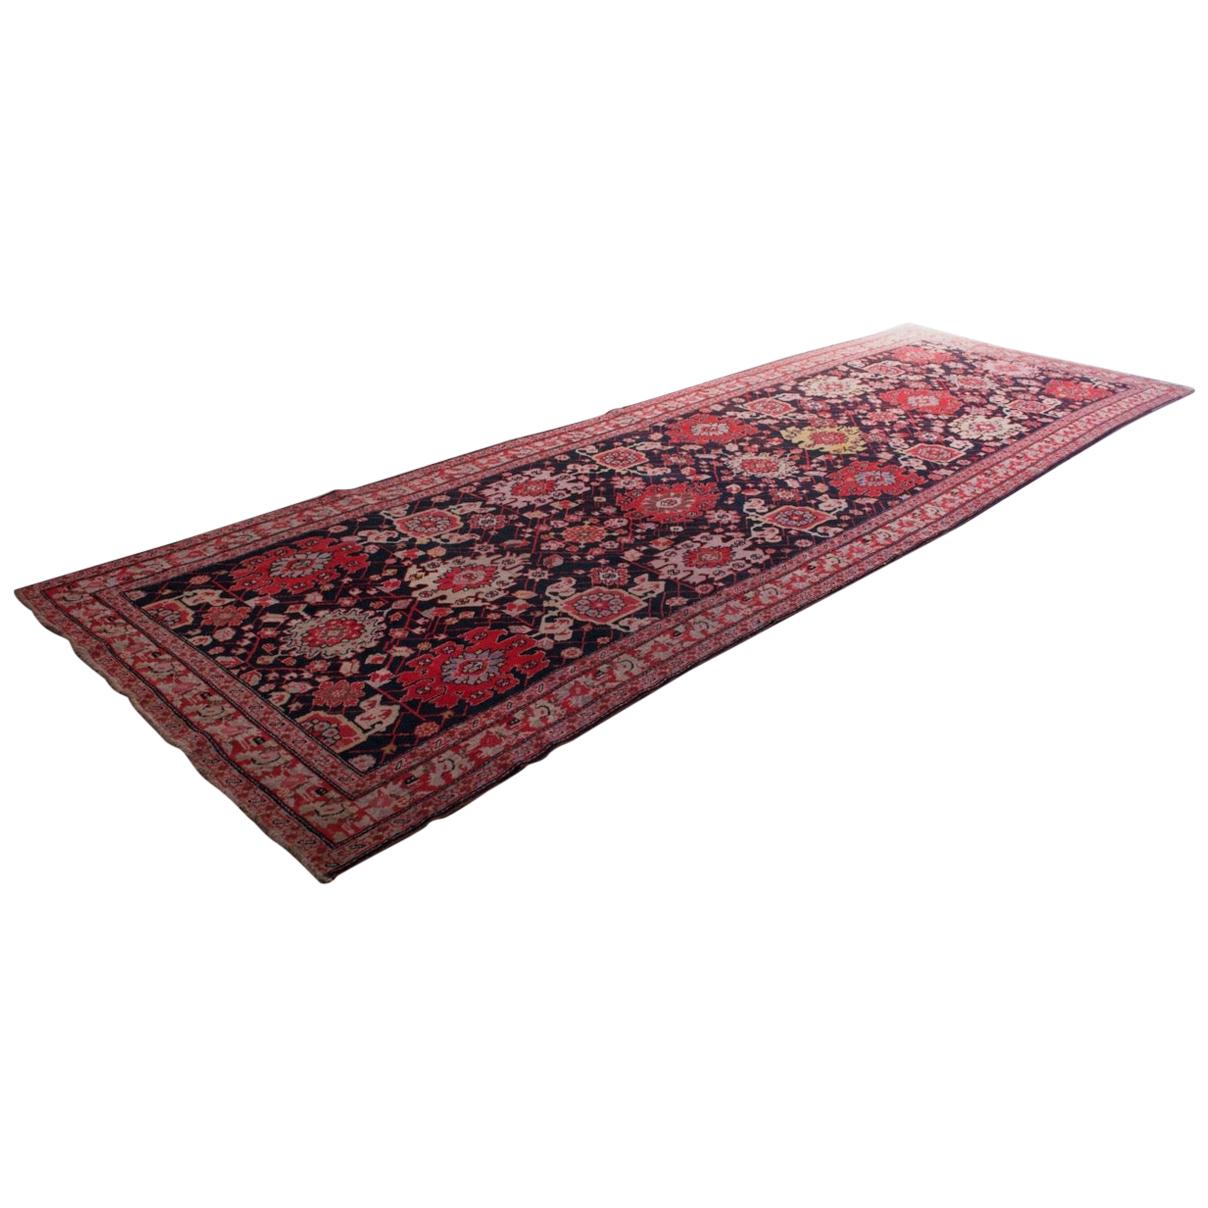 Large Antique Caucasian Karabagh Carpet / Runner For Sale